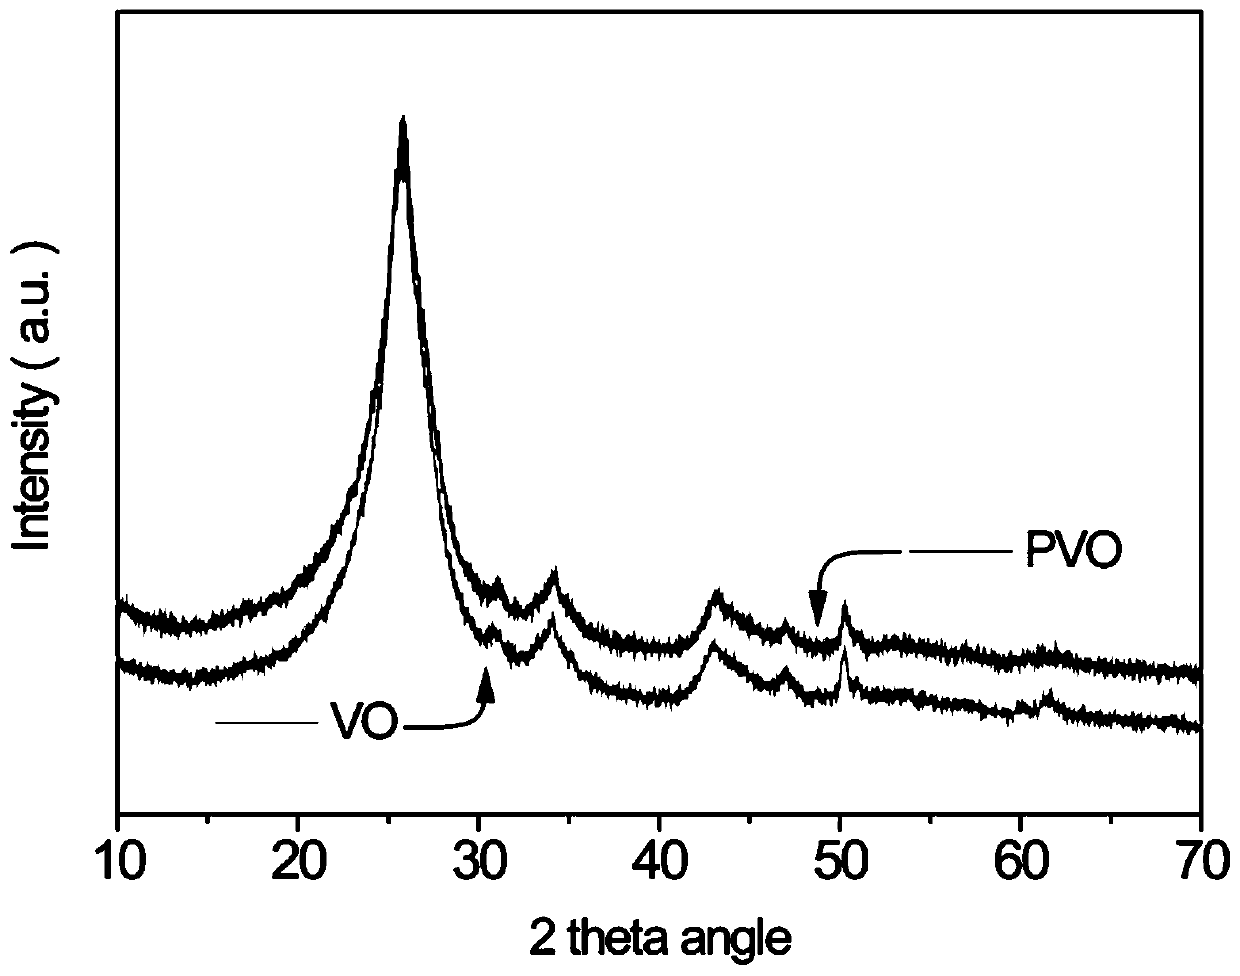 Novel vanadium oxide anode material preparation through valency regulation and surface modification